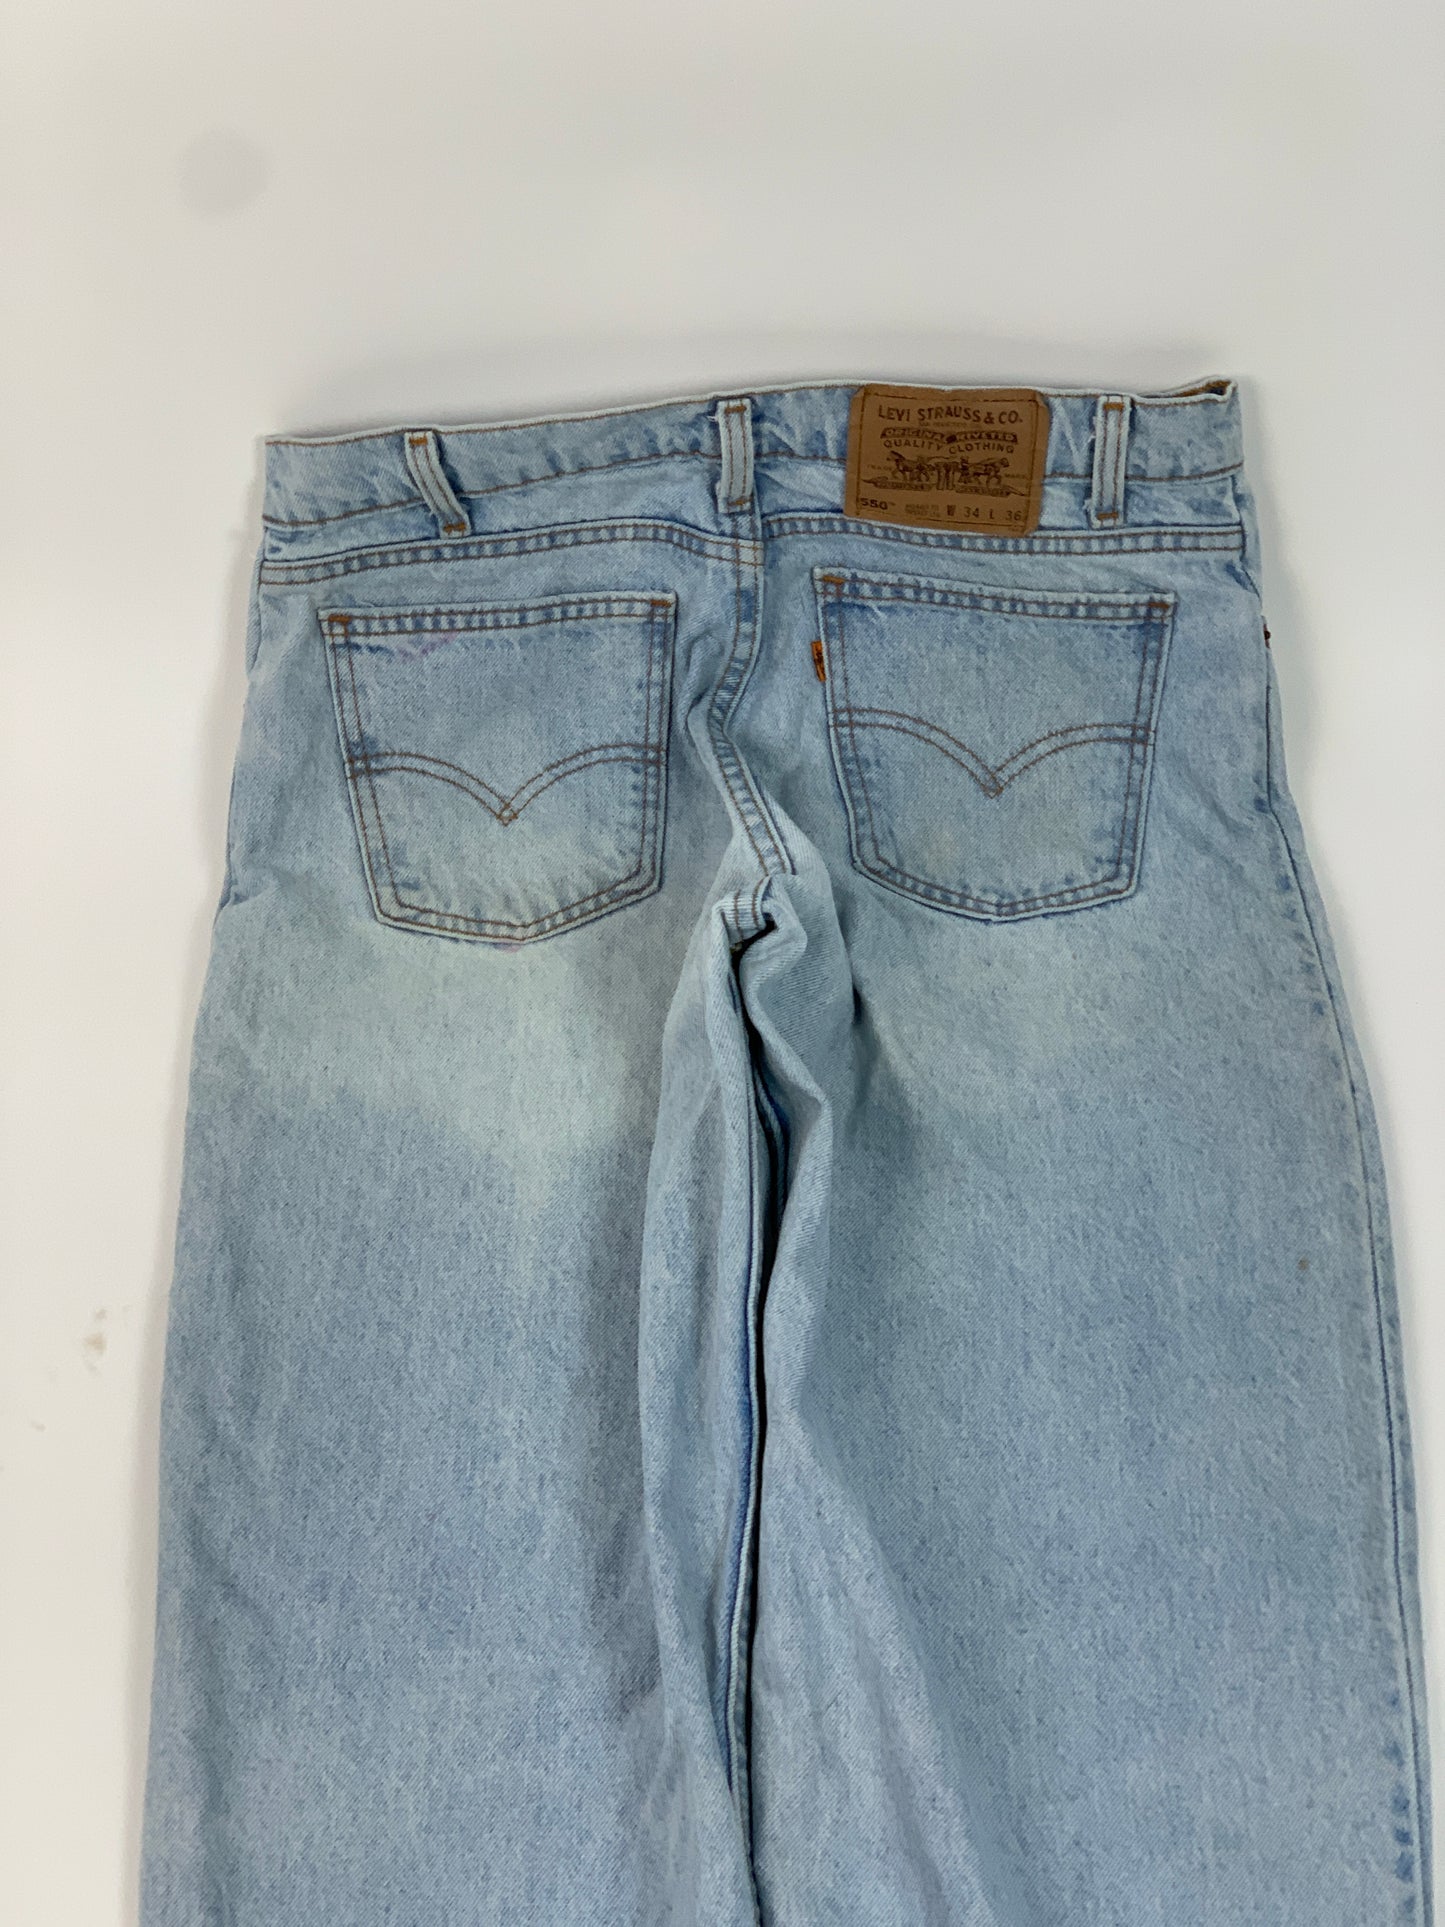 Levis Orange Tab Vintage Wash Jeans - 34